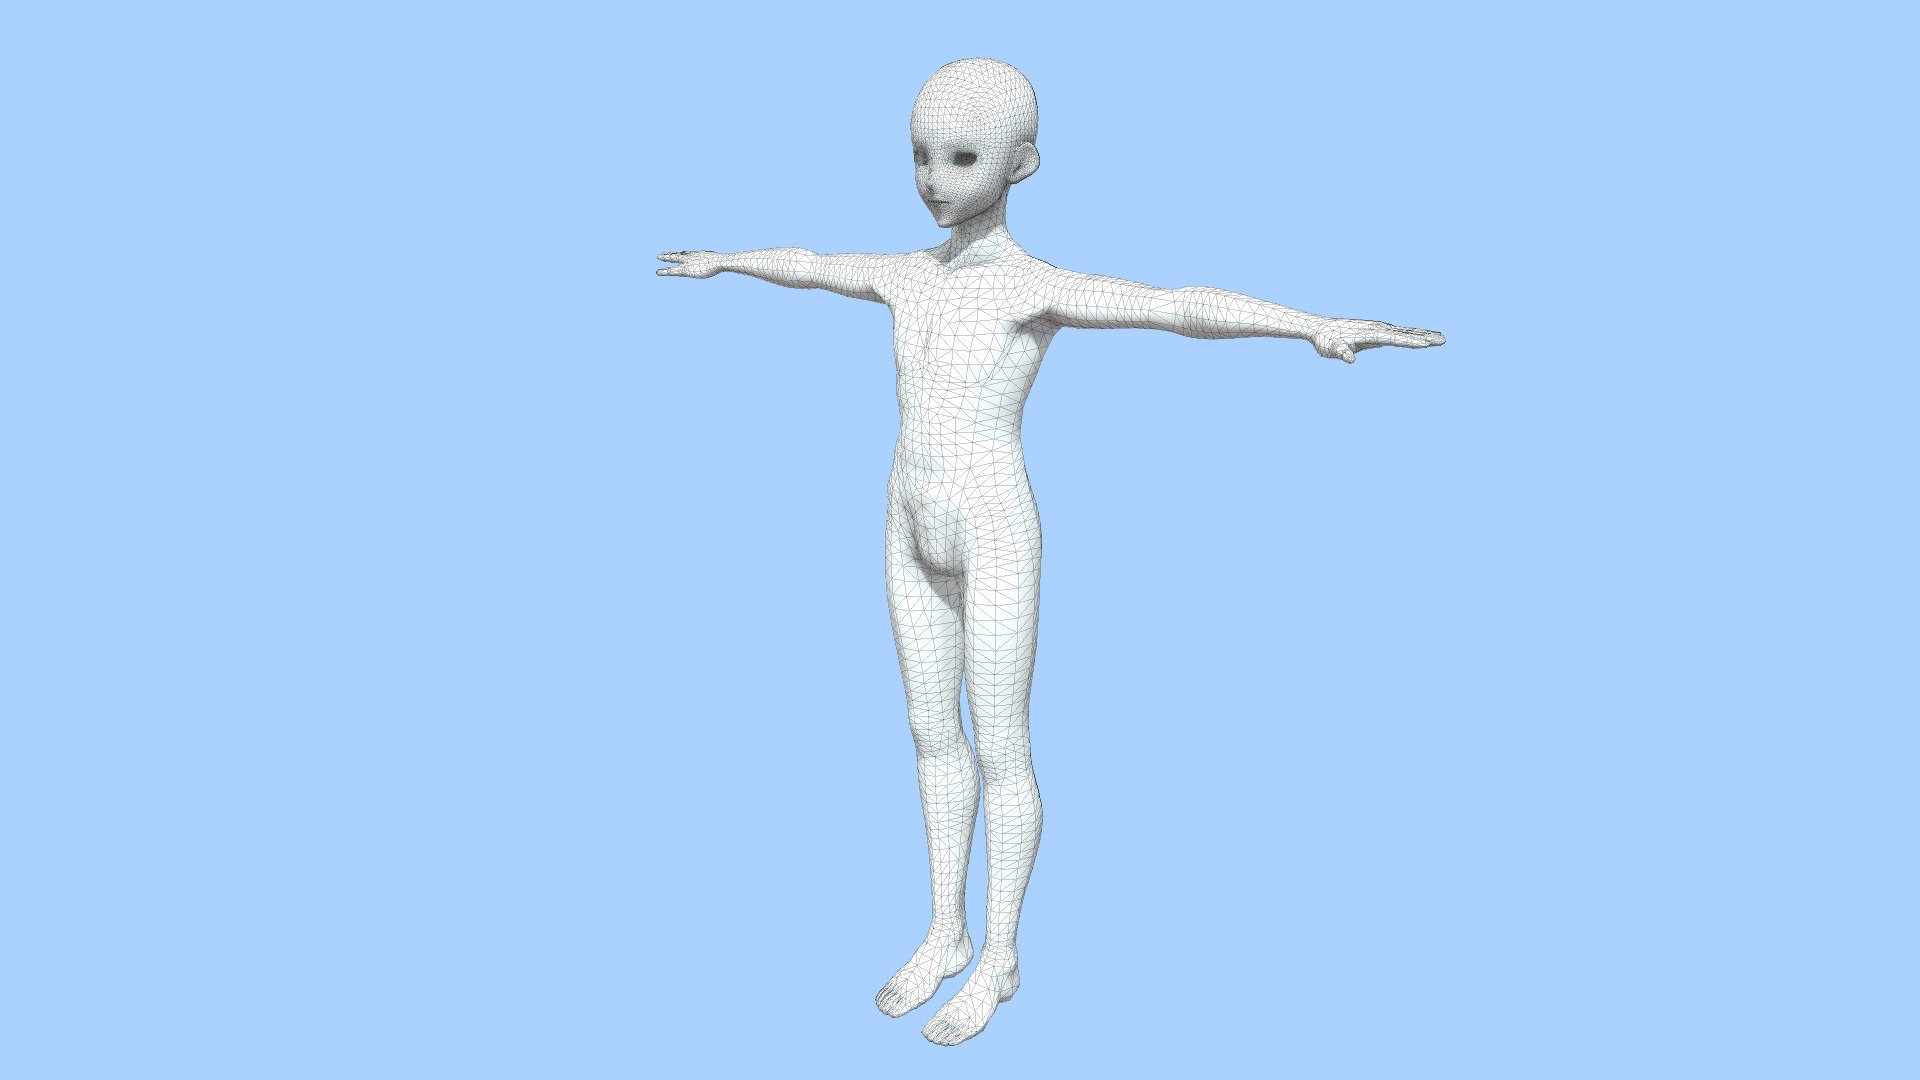 3D model Base Mesh Male Body VR / AR / low-poly